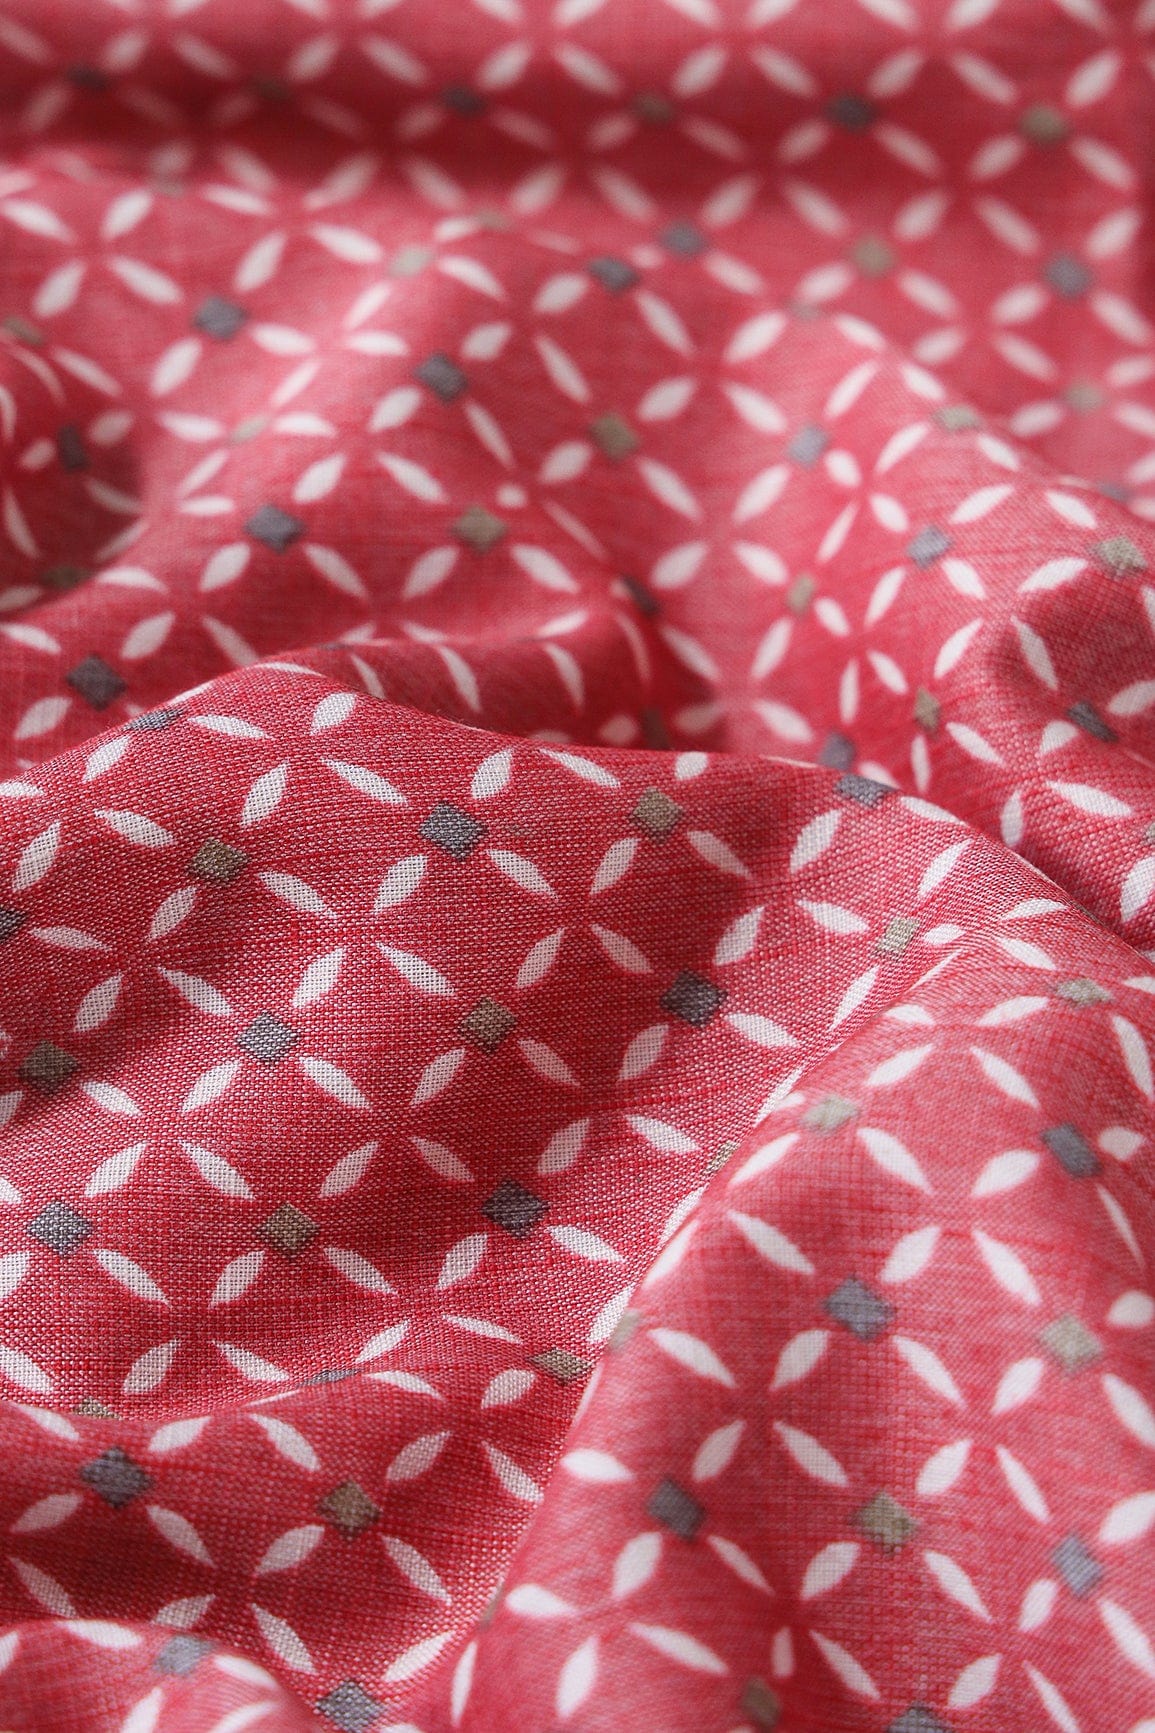 doeraa Prints Light Maroon And White Geometric Pattern On Rayon Fabric